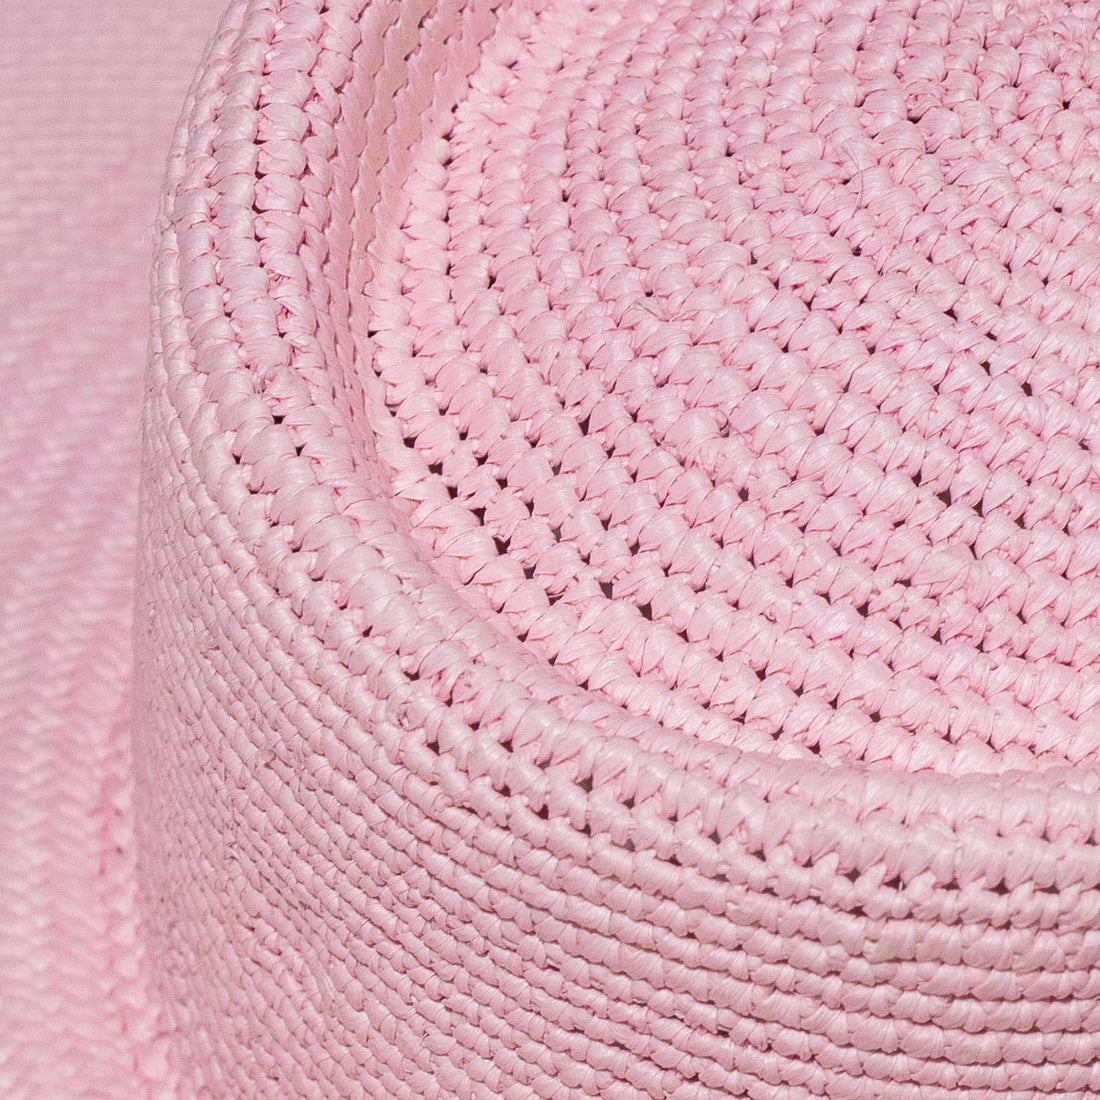 Clyde Dai Hat in Petal Pink